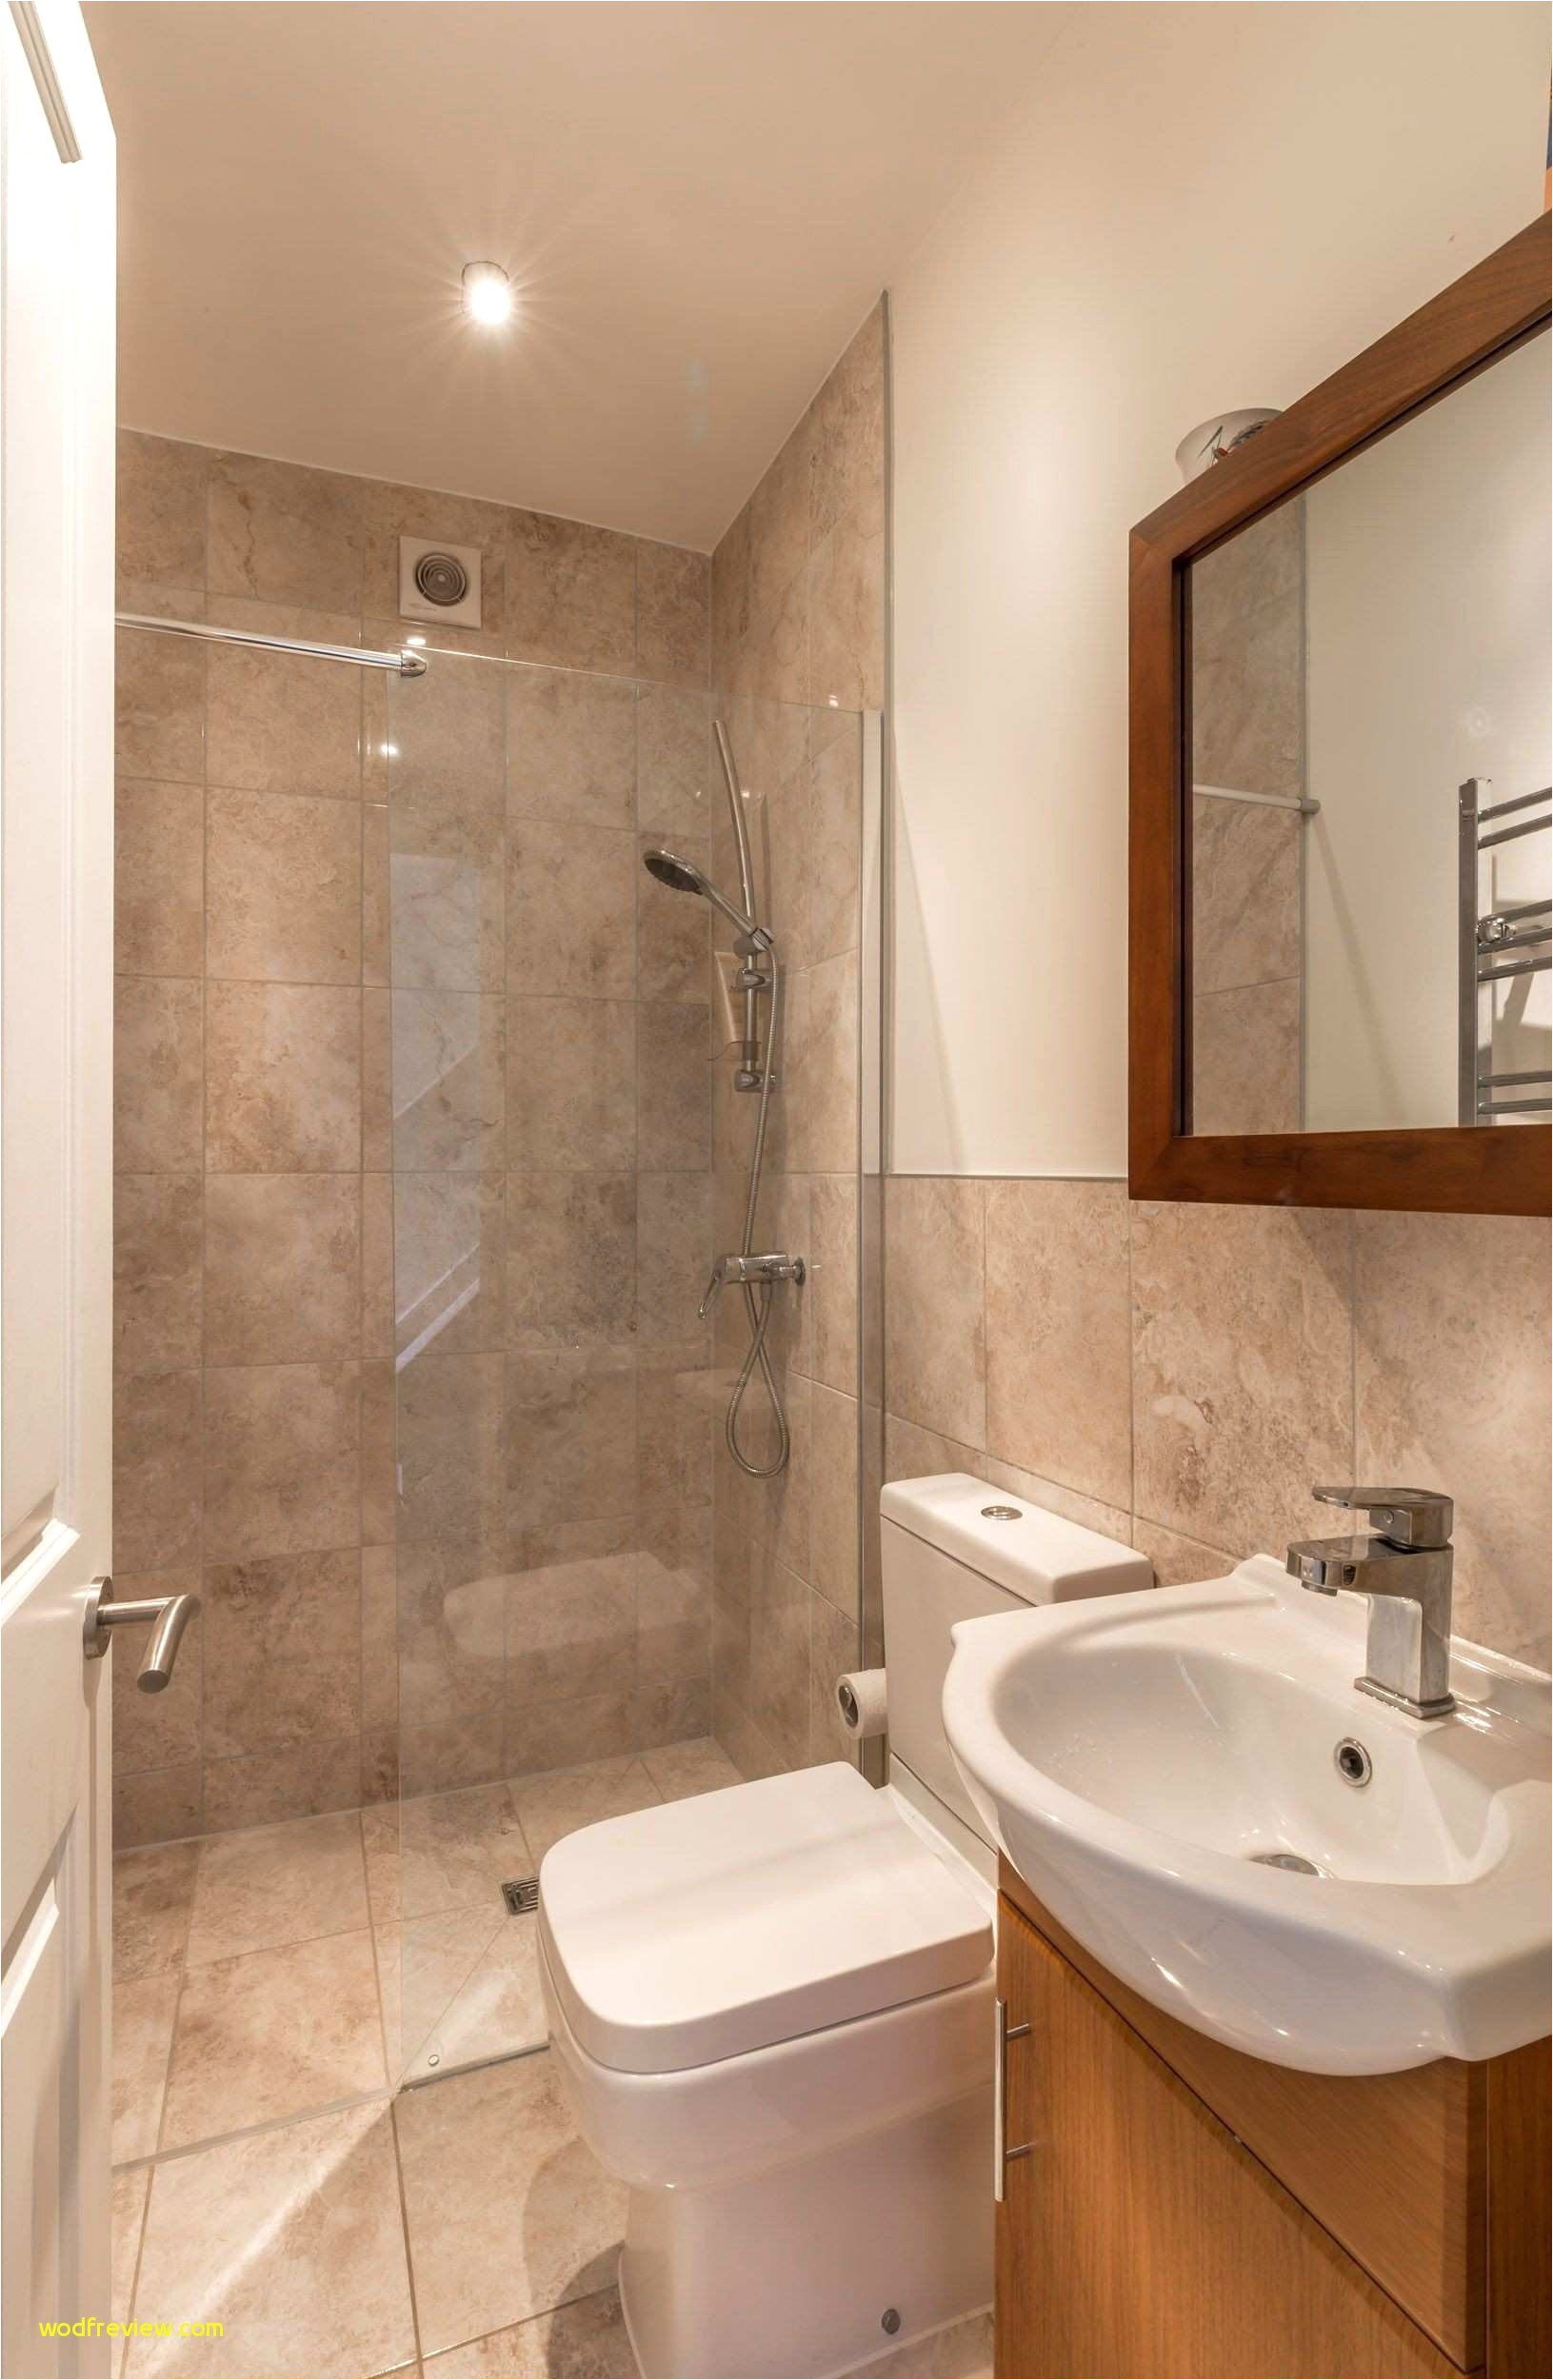 amazing bathroom design new luxury shower light h sink install i 0d design over mirror